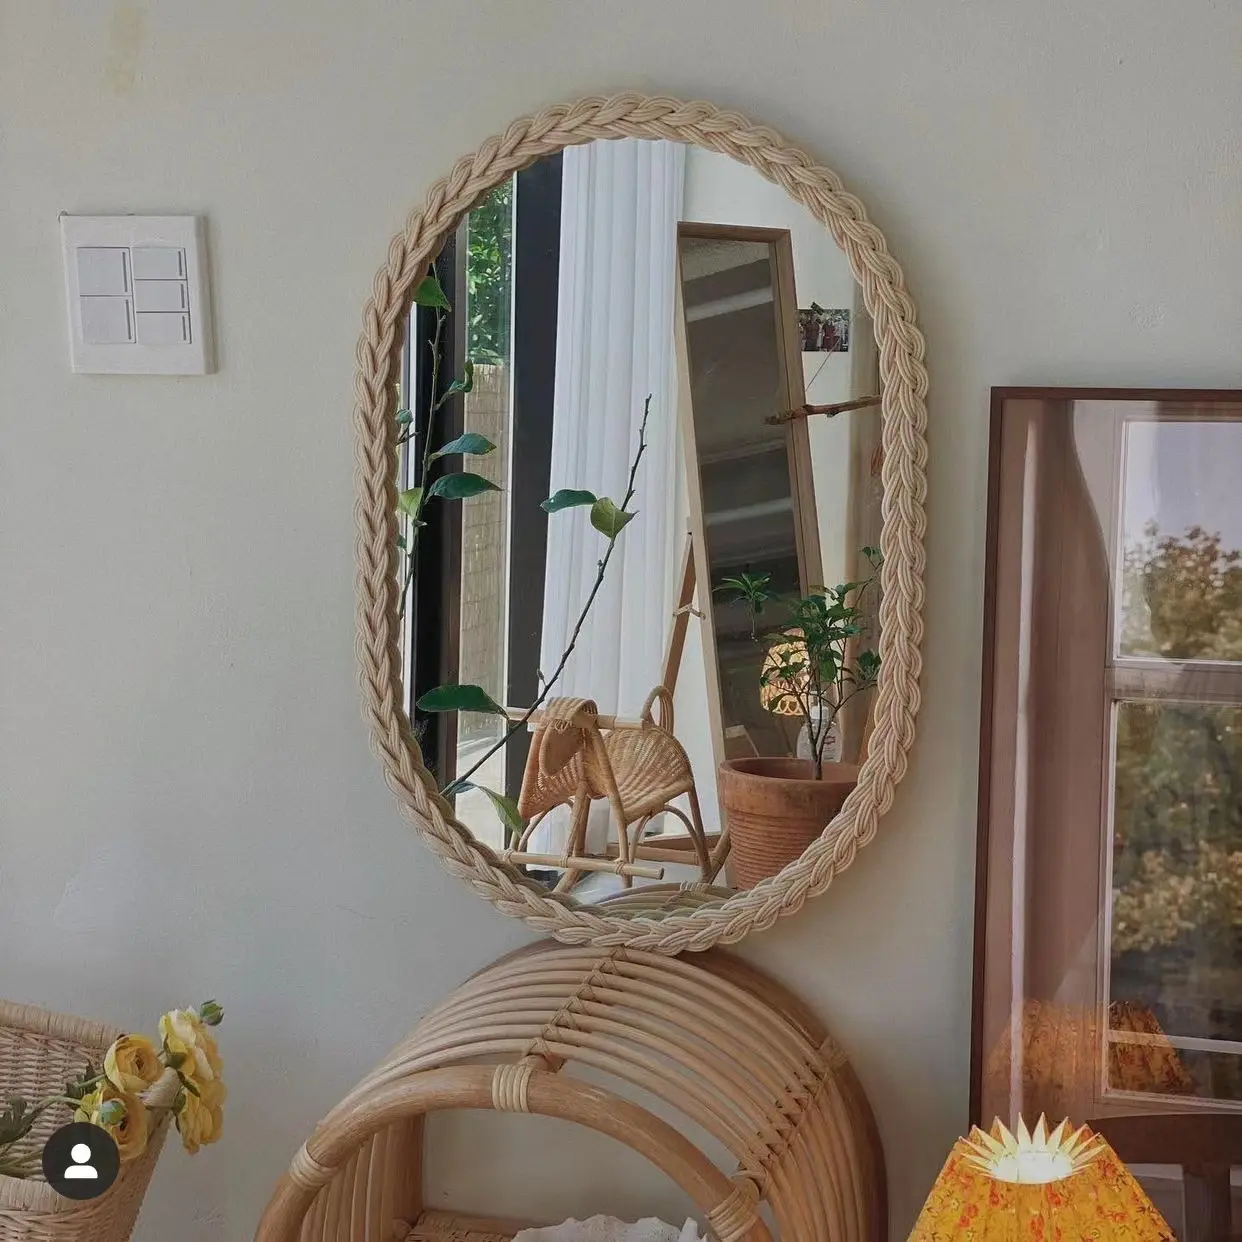 Nordic New style simple rattan Mirror Oval dresser decorative mirror retro style wall hanging mirror